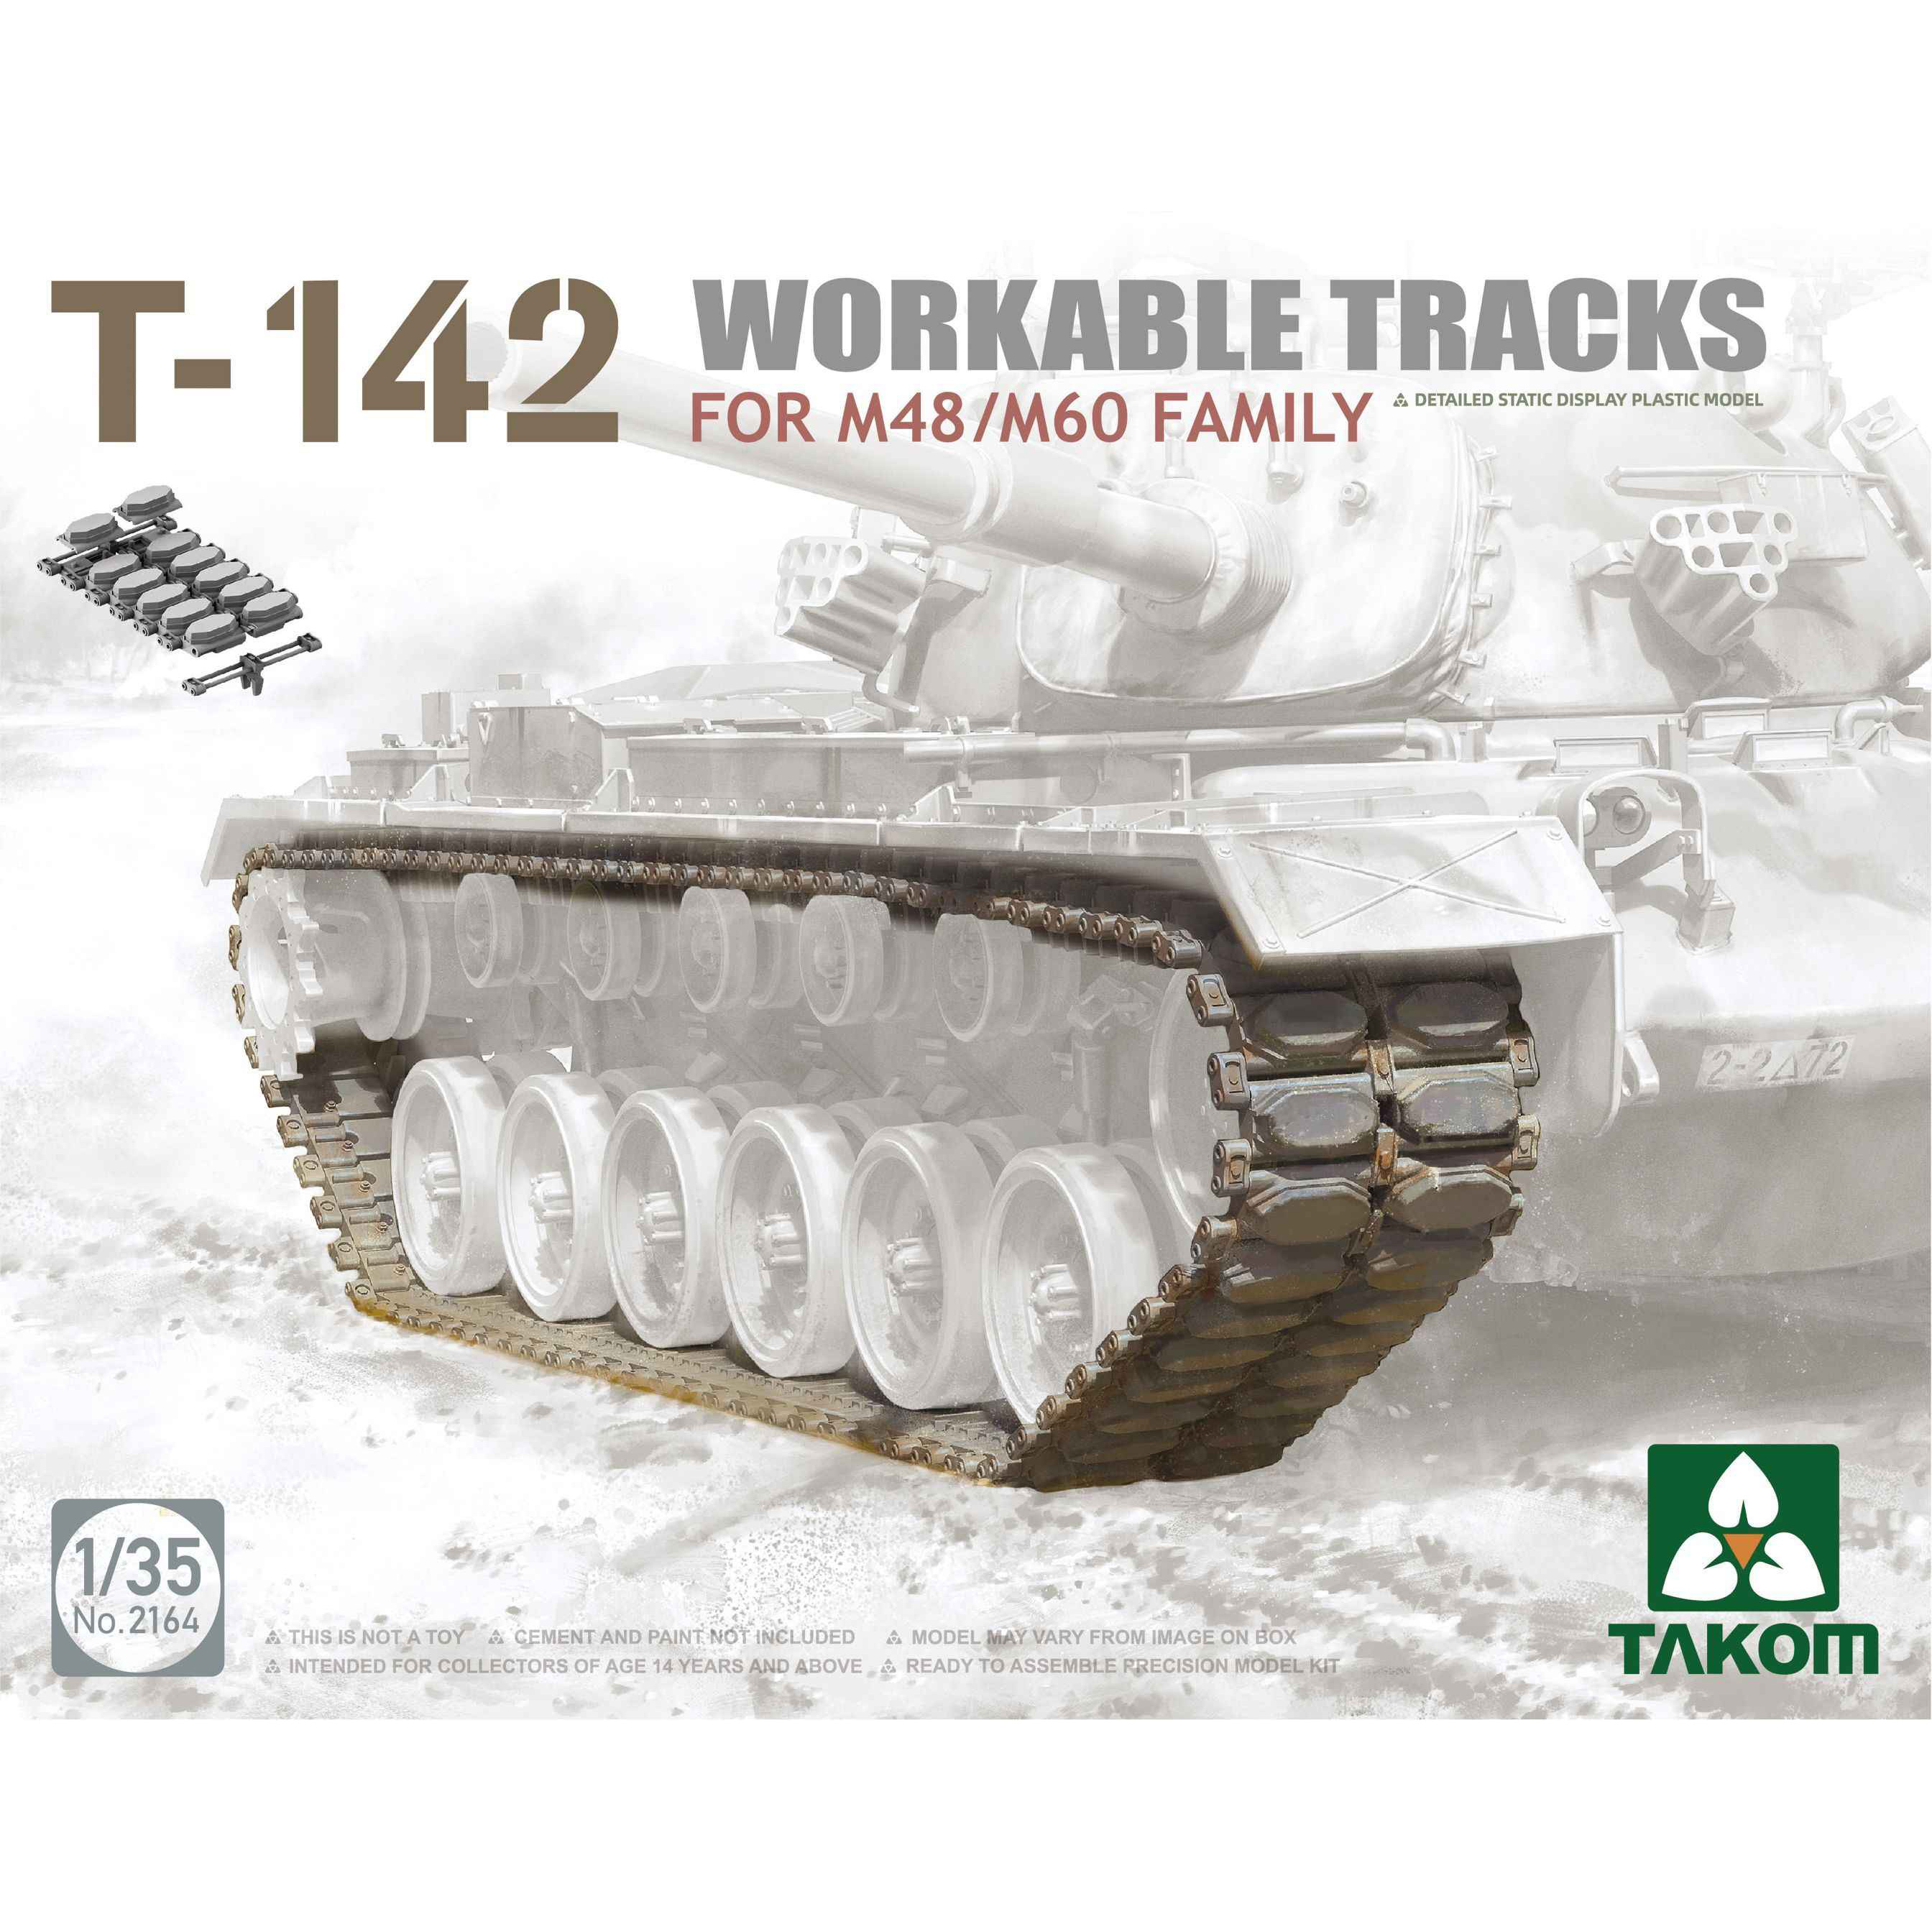 2164 Takom 1/35 Working Typesetting Tracks T-142 for M48/M60